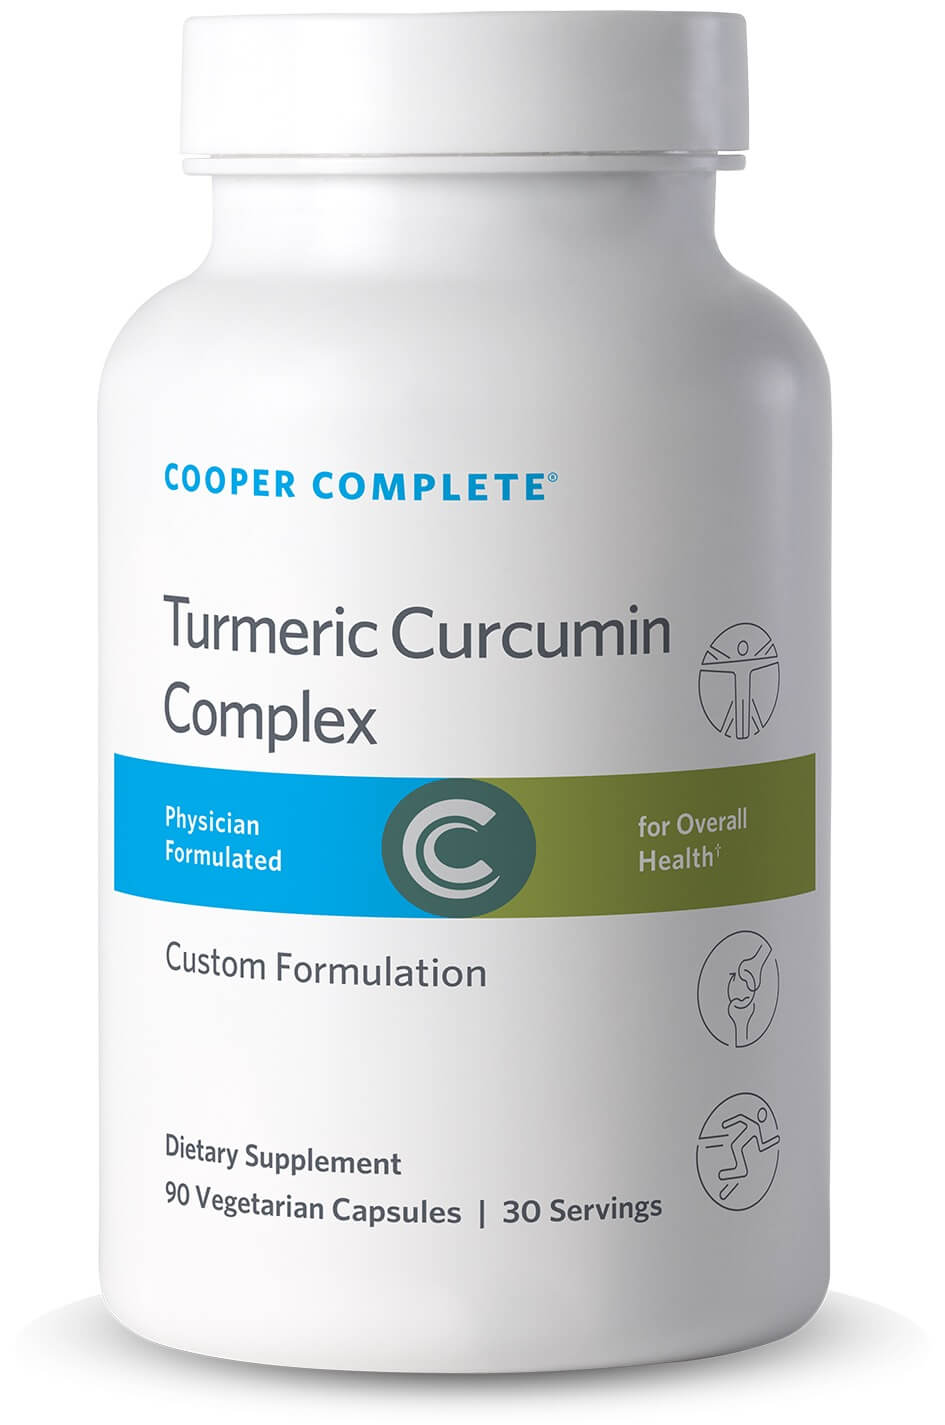 Photo of Cooper Complete Turmeric Curcumin Supplement bottle